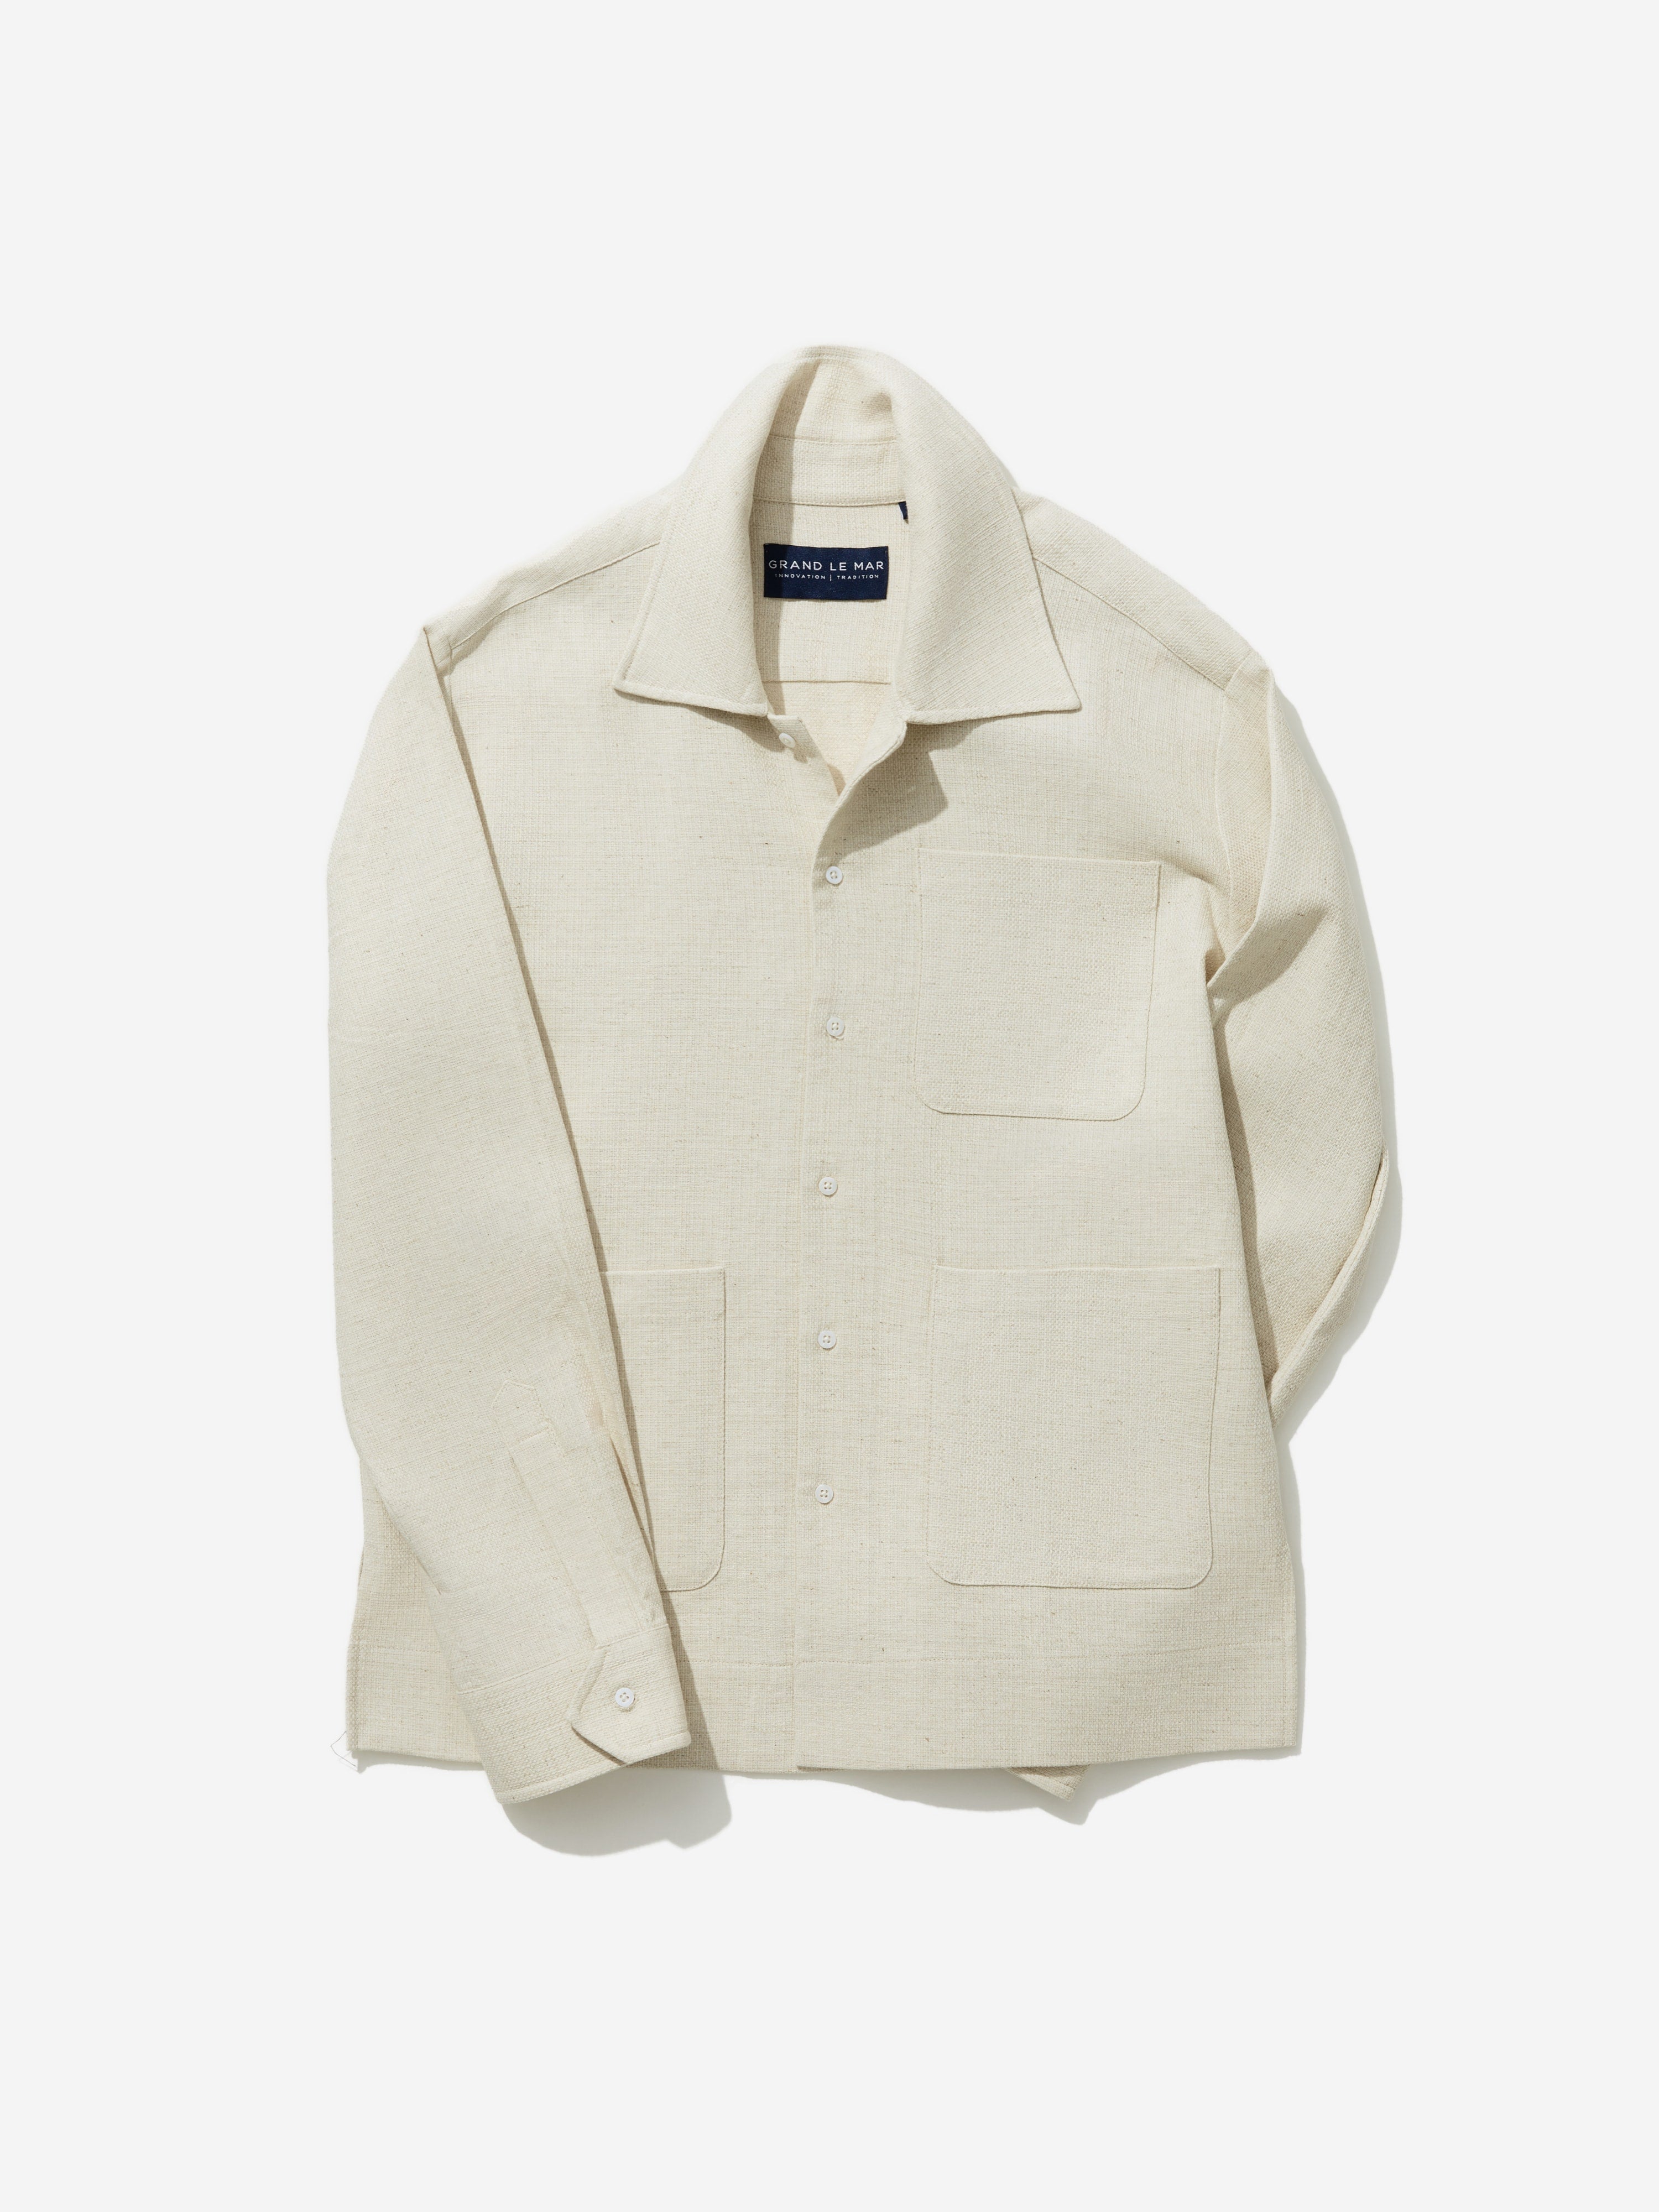 Oatmeal Handspun Cotton Linen Overshirt - Grand Le Mar